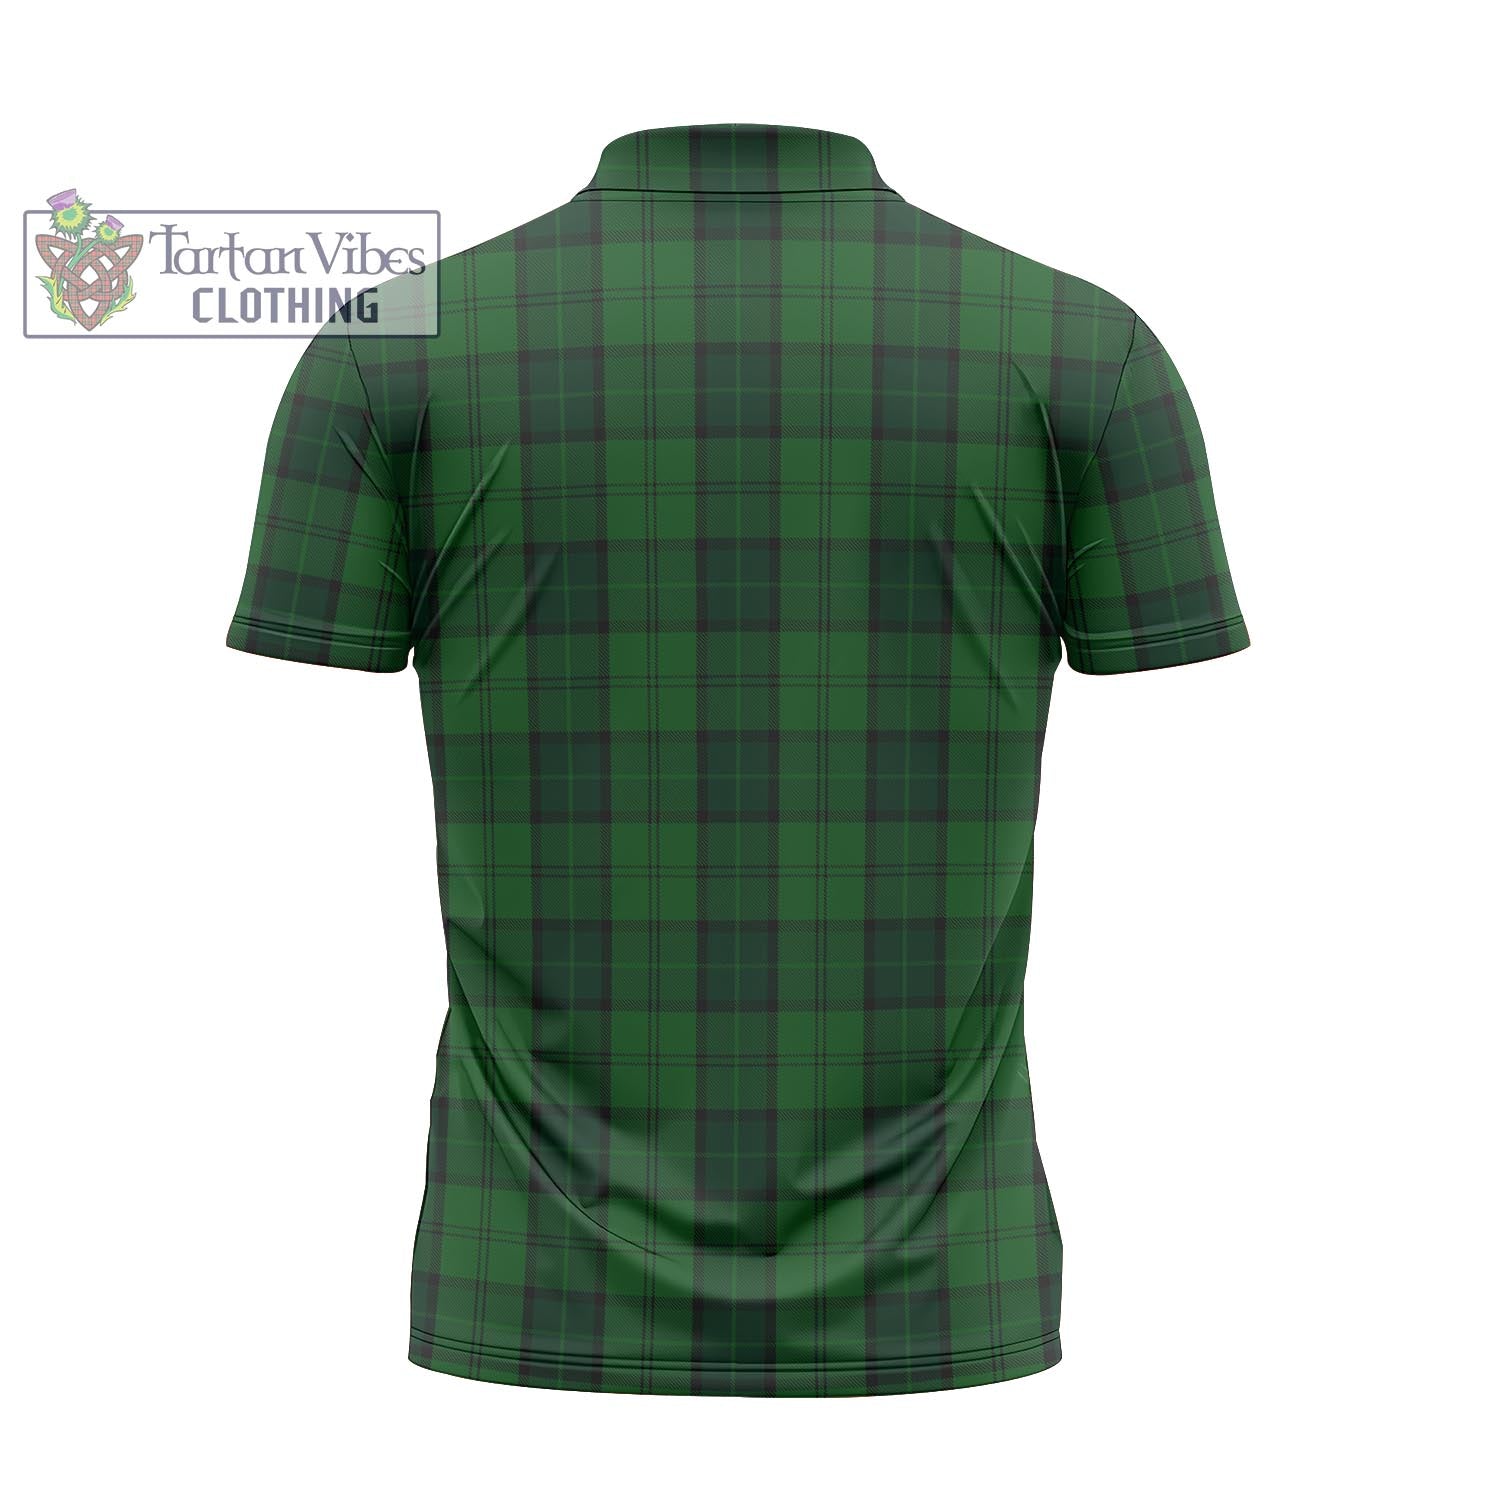 Tartan Vibes Clothing Dunbar Hunting Tartan Zipper Polo Shirt with Family Crest